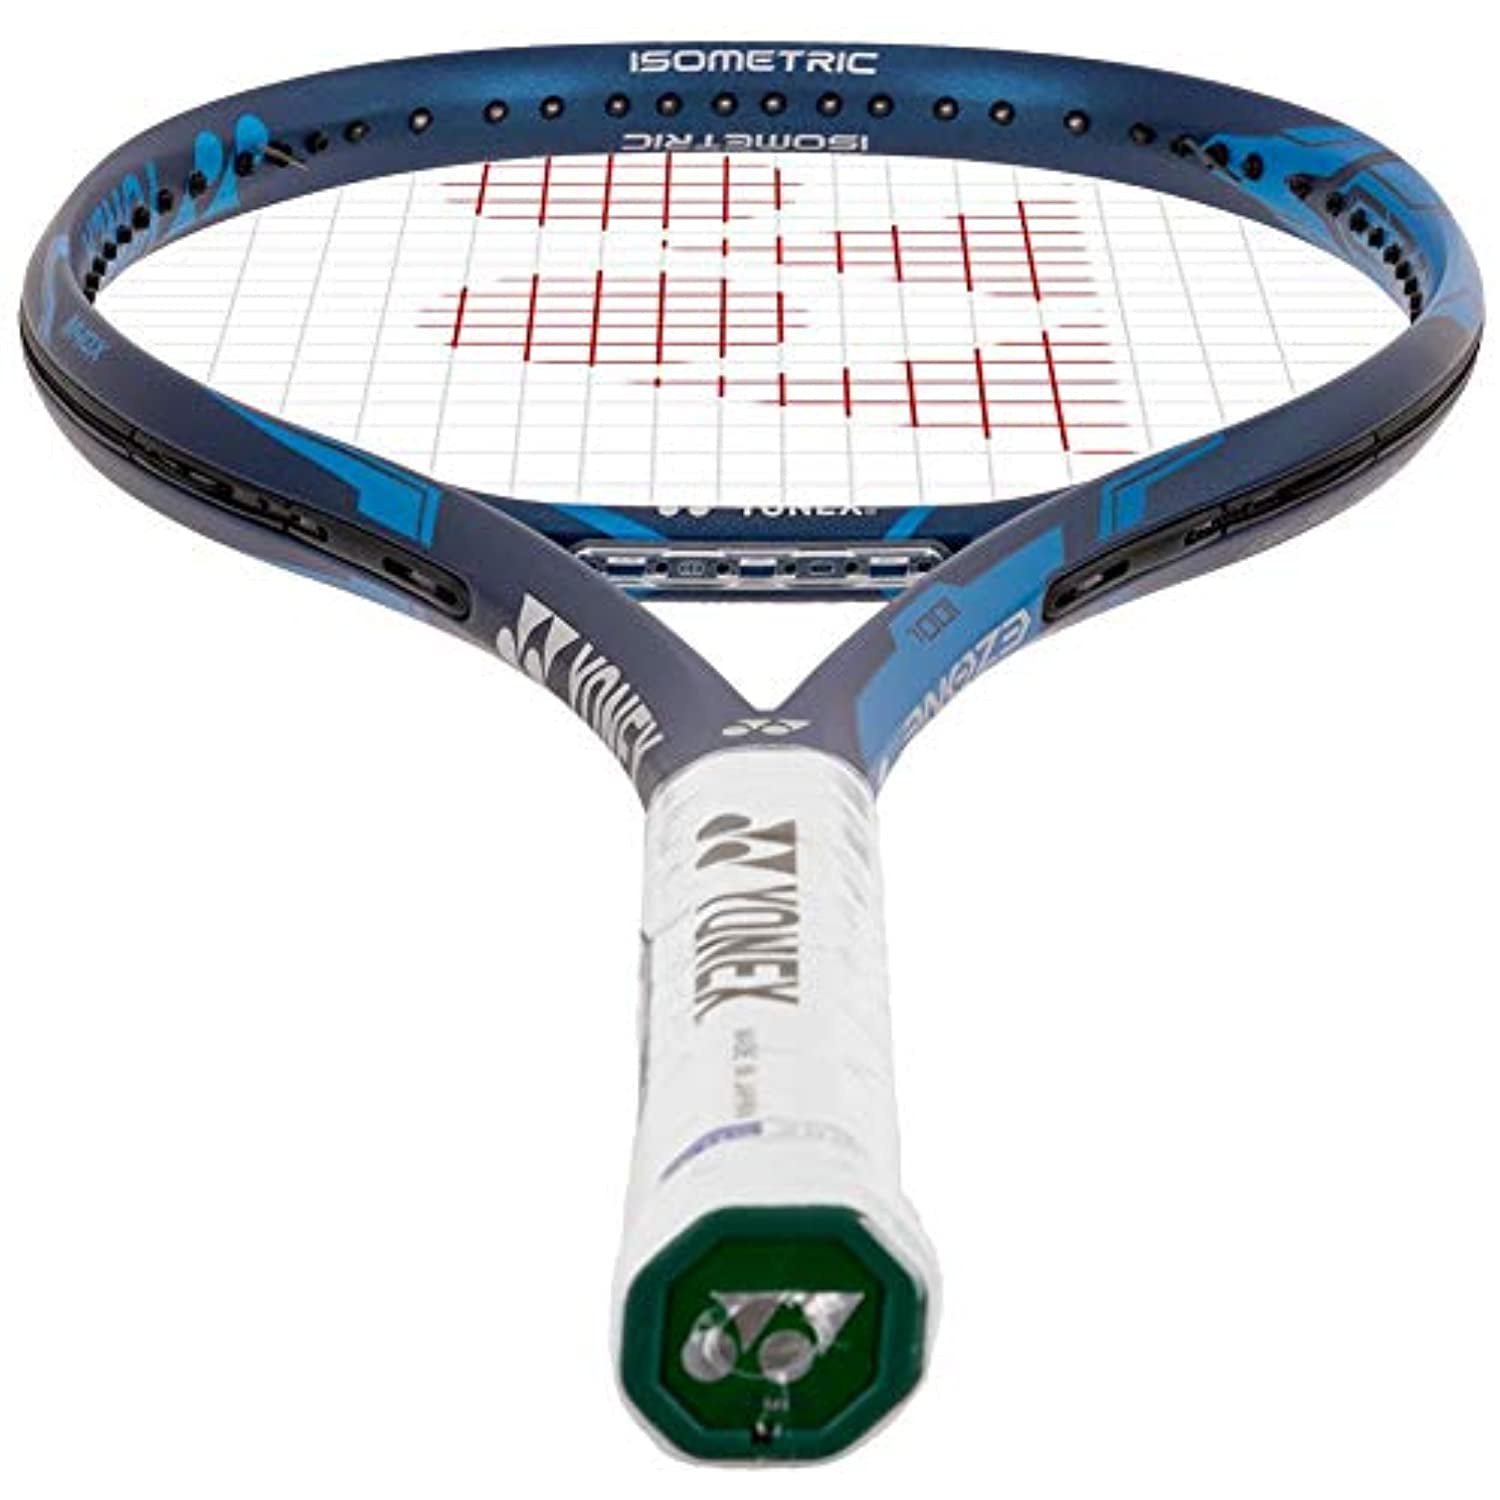 excel 112, in packaging surplus stock wilson pro staff tennis racket new 